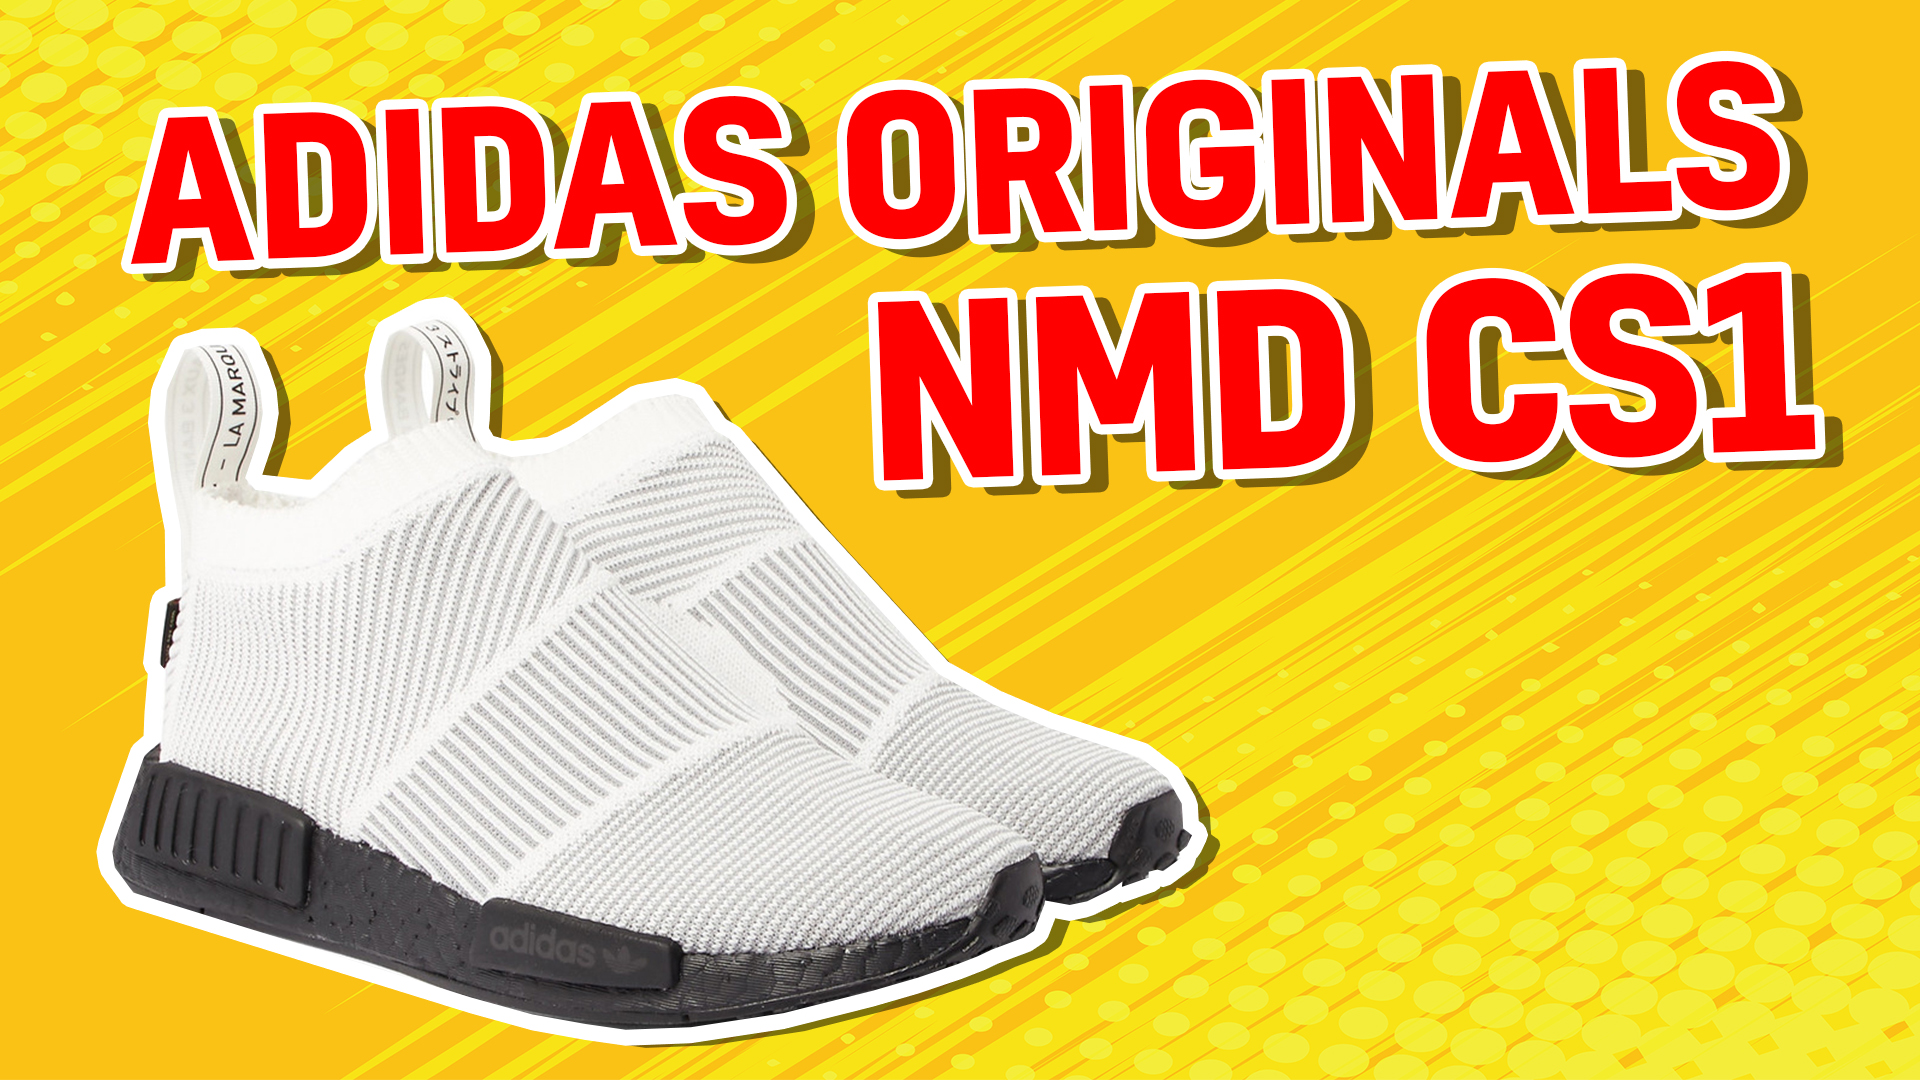 ADIDAS ORIGINALS NMD CS1